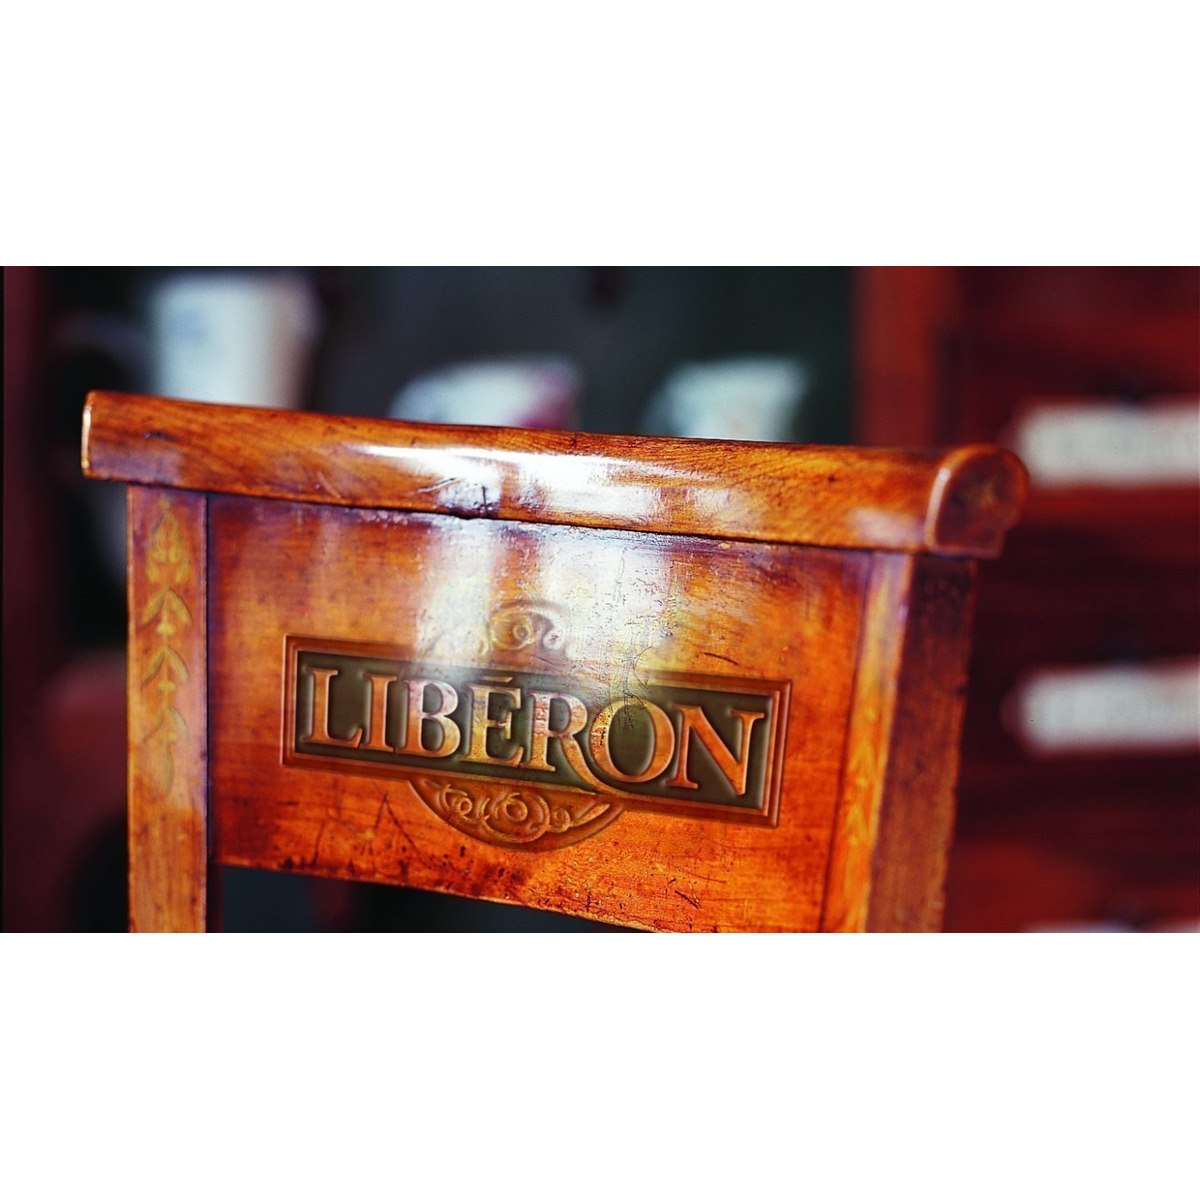 Where to buy Liberon Spirit Wood Dyes